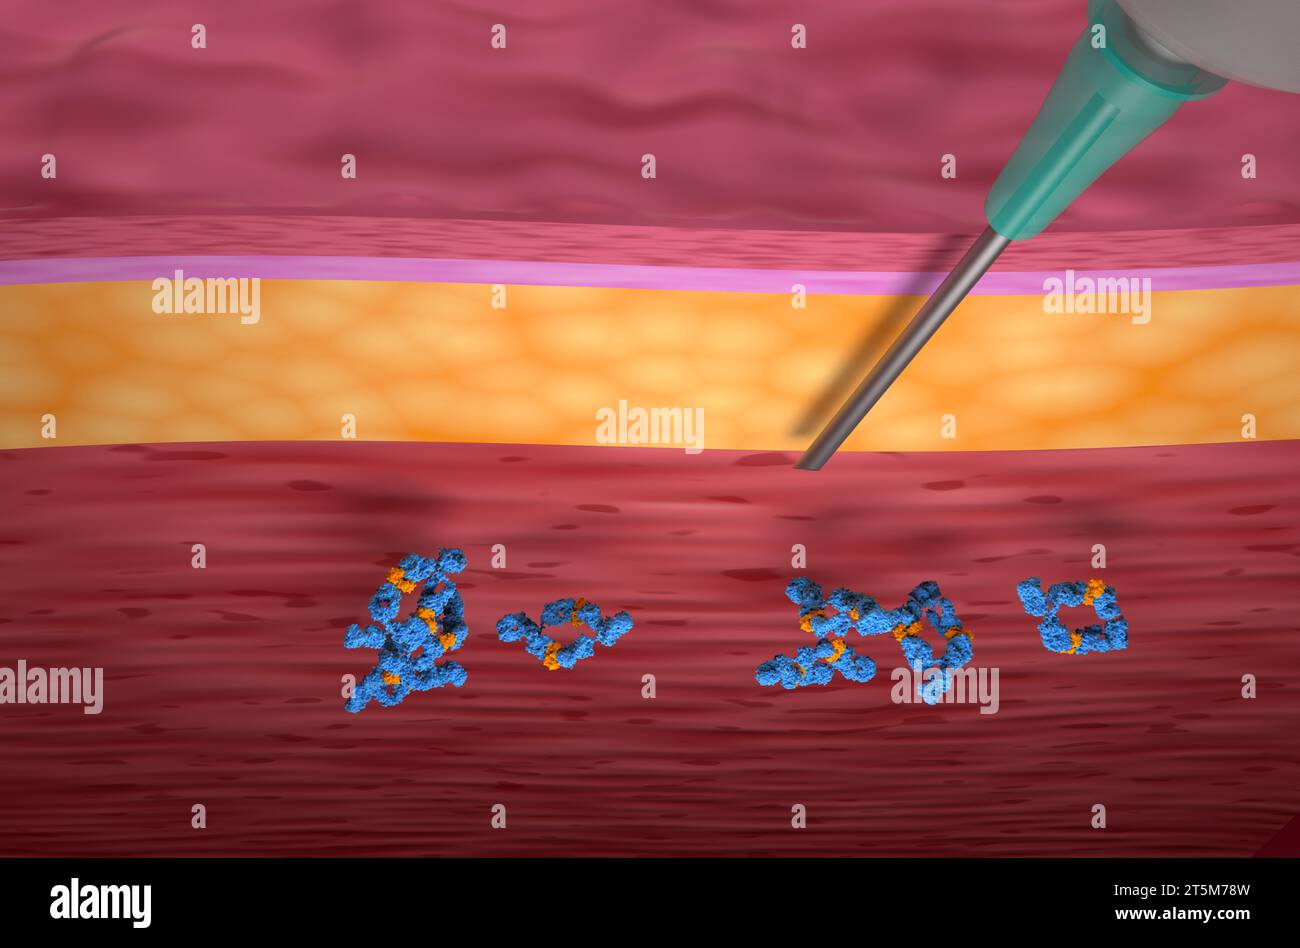 Monoclonal antibody treatment (Adalimumab) - top view 3d illustration Stock Photo